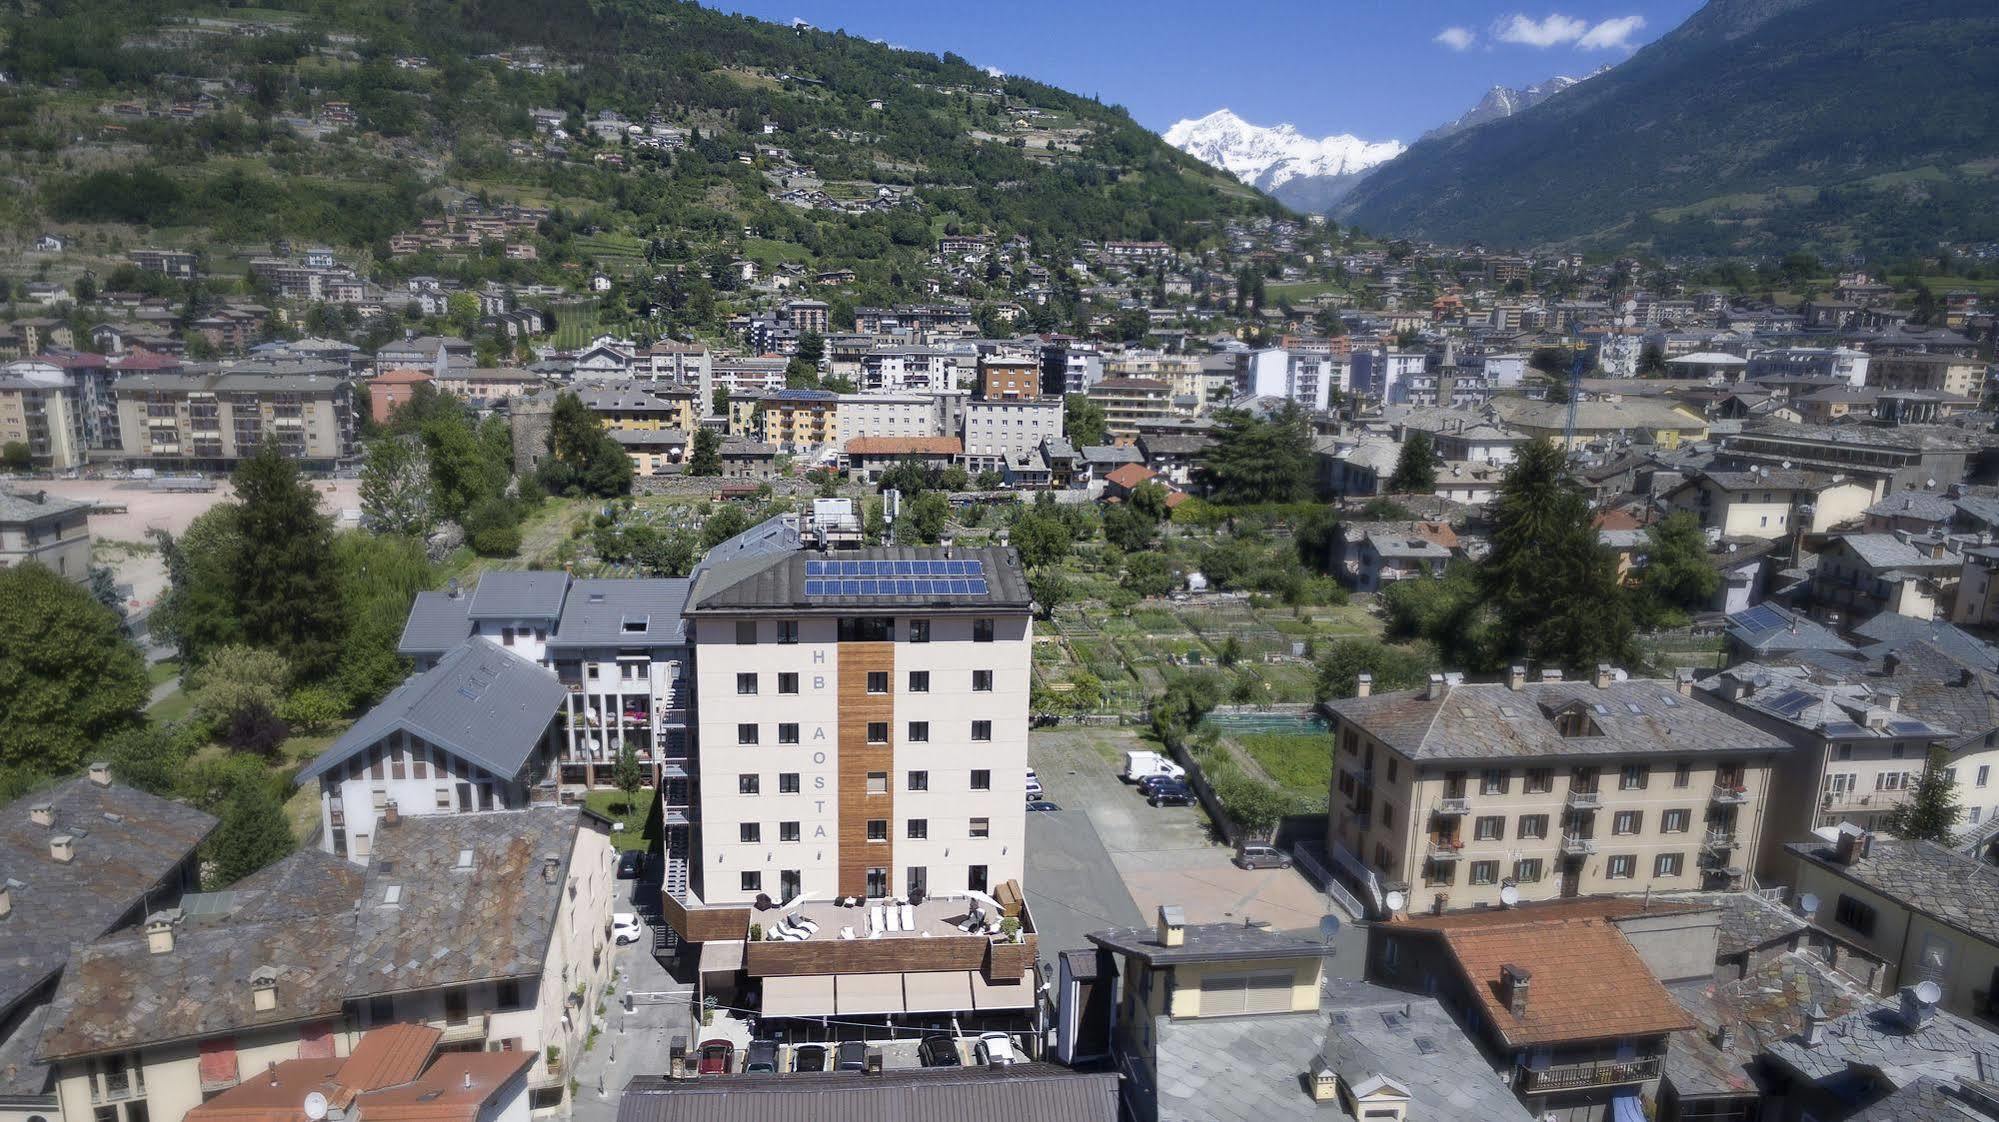 Hb Aosta Hotel & Balcony Spa Exterior foto